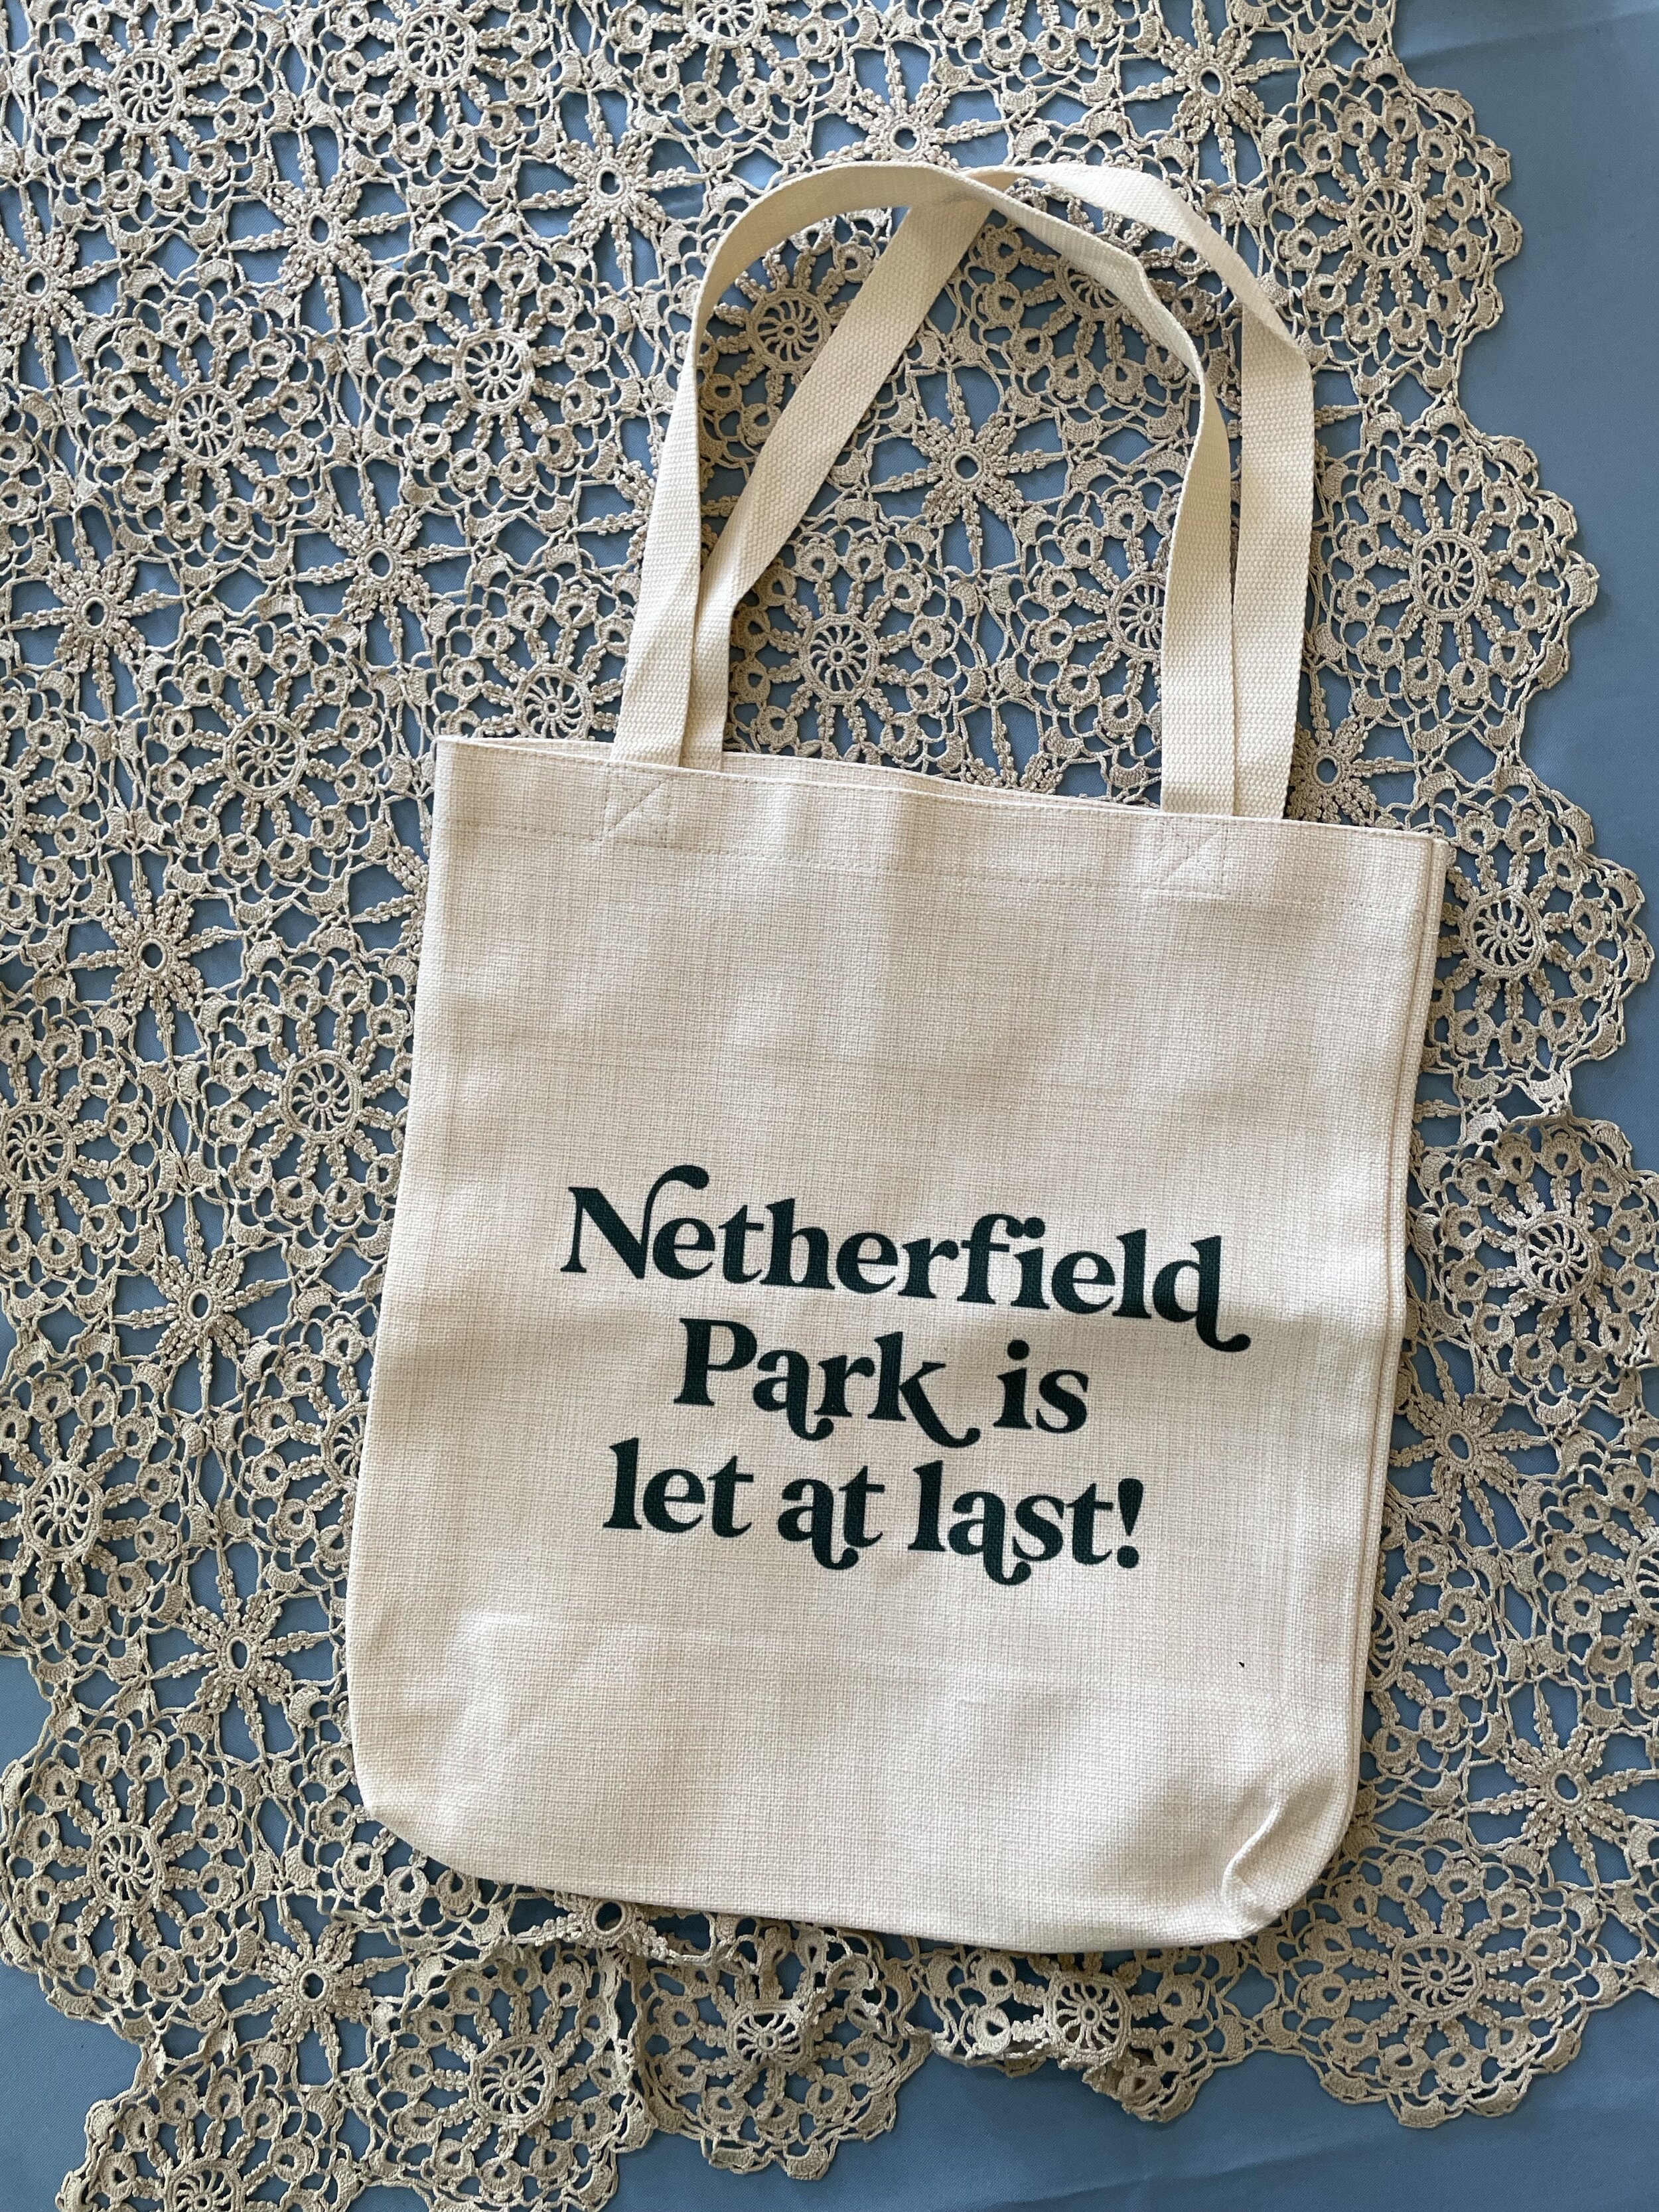 Netherfield Park Is Let at Last! — Bingley's Teas